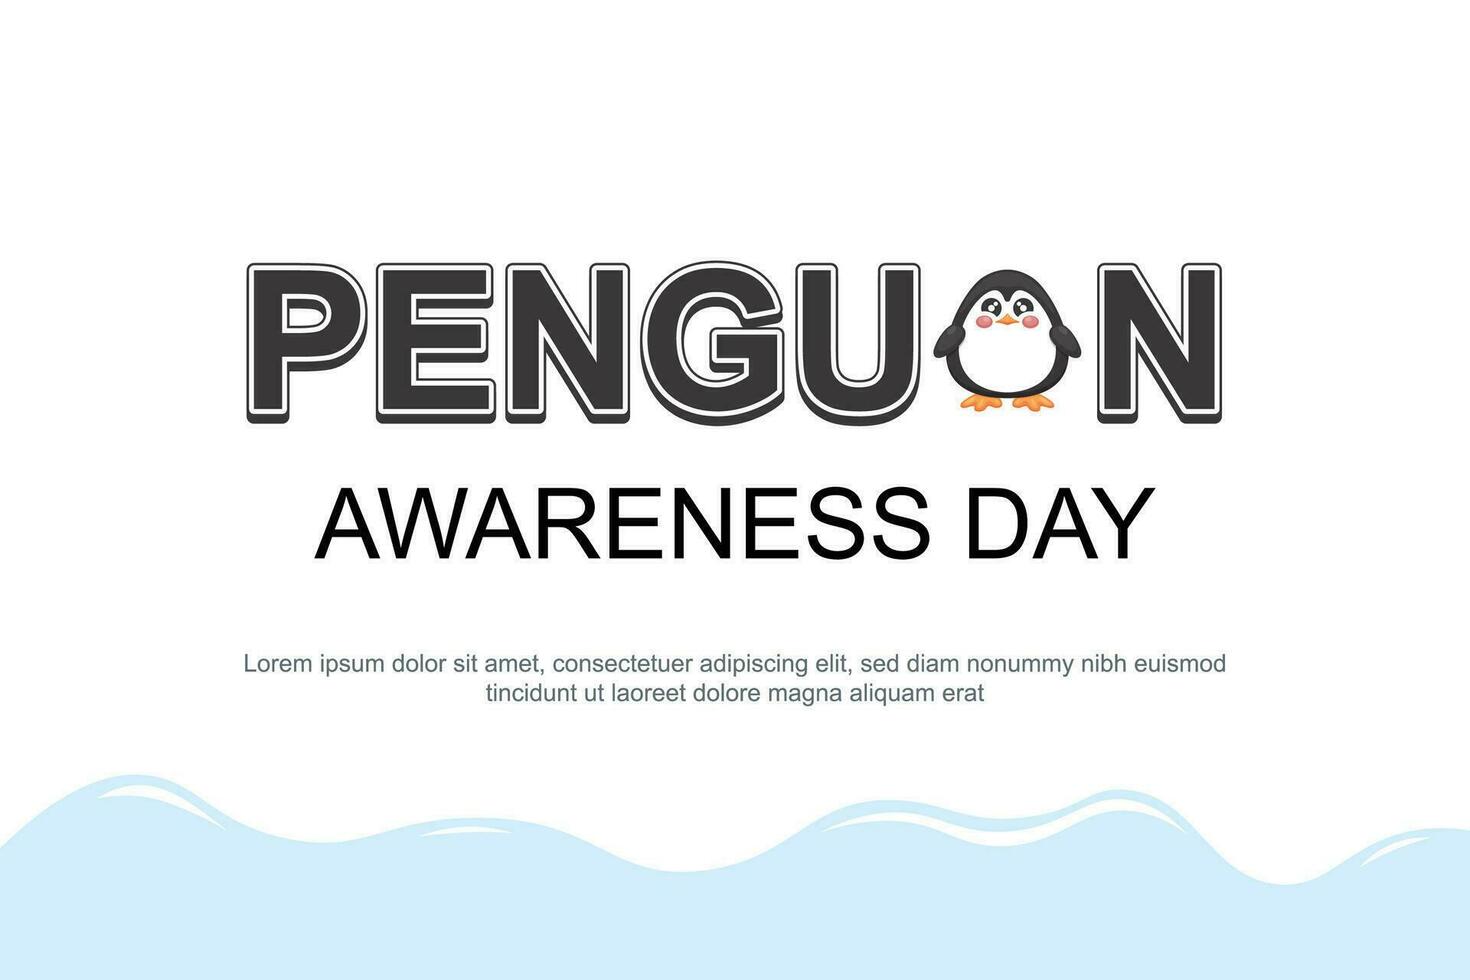 Penguin Awareness Day background. vector